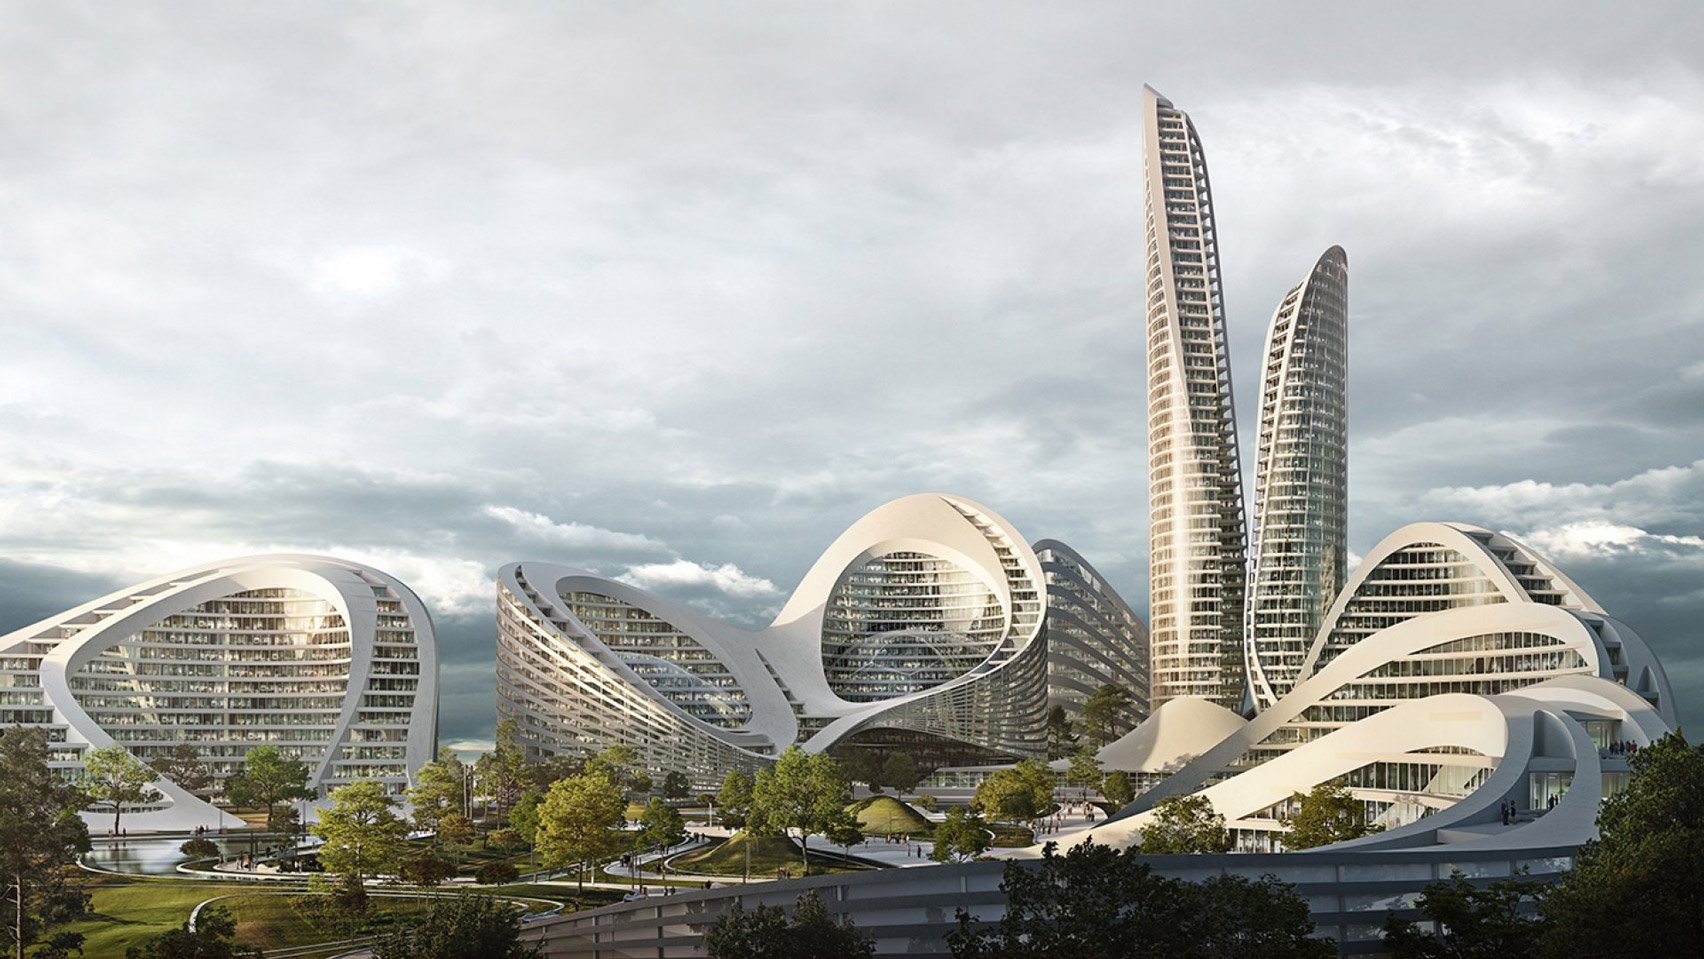 rublyovo-arkhangelskoye-moscow-smart-city-zaha-hadid-architects-flying-architecture